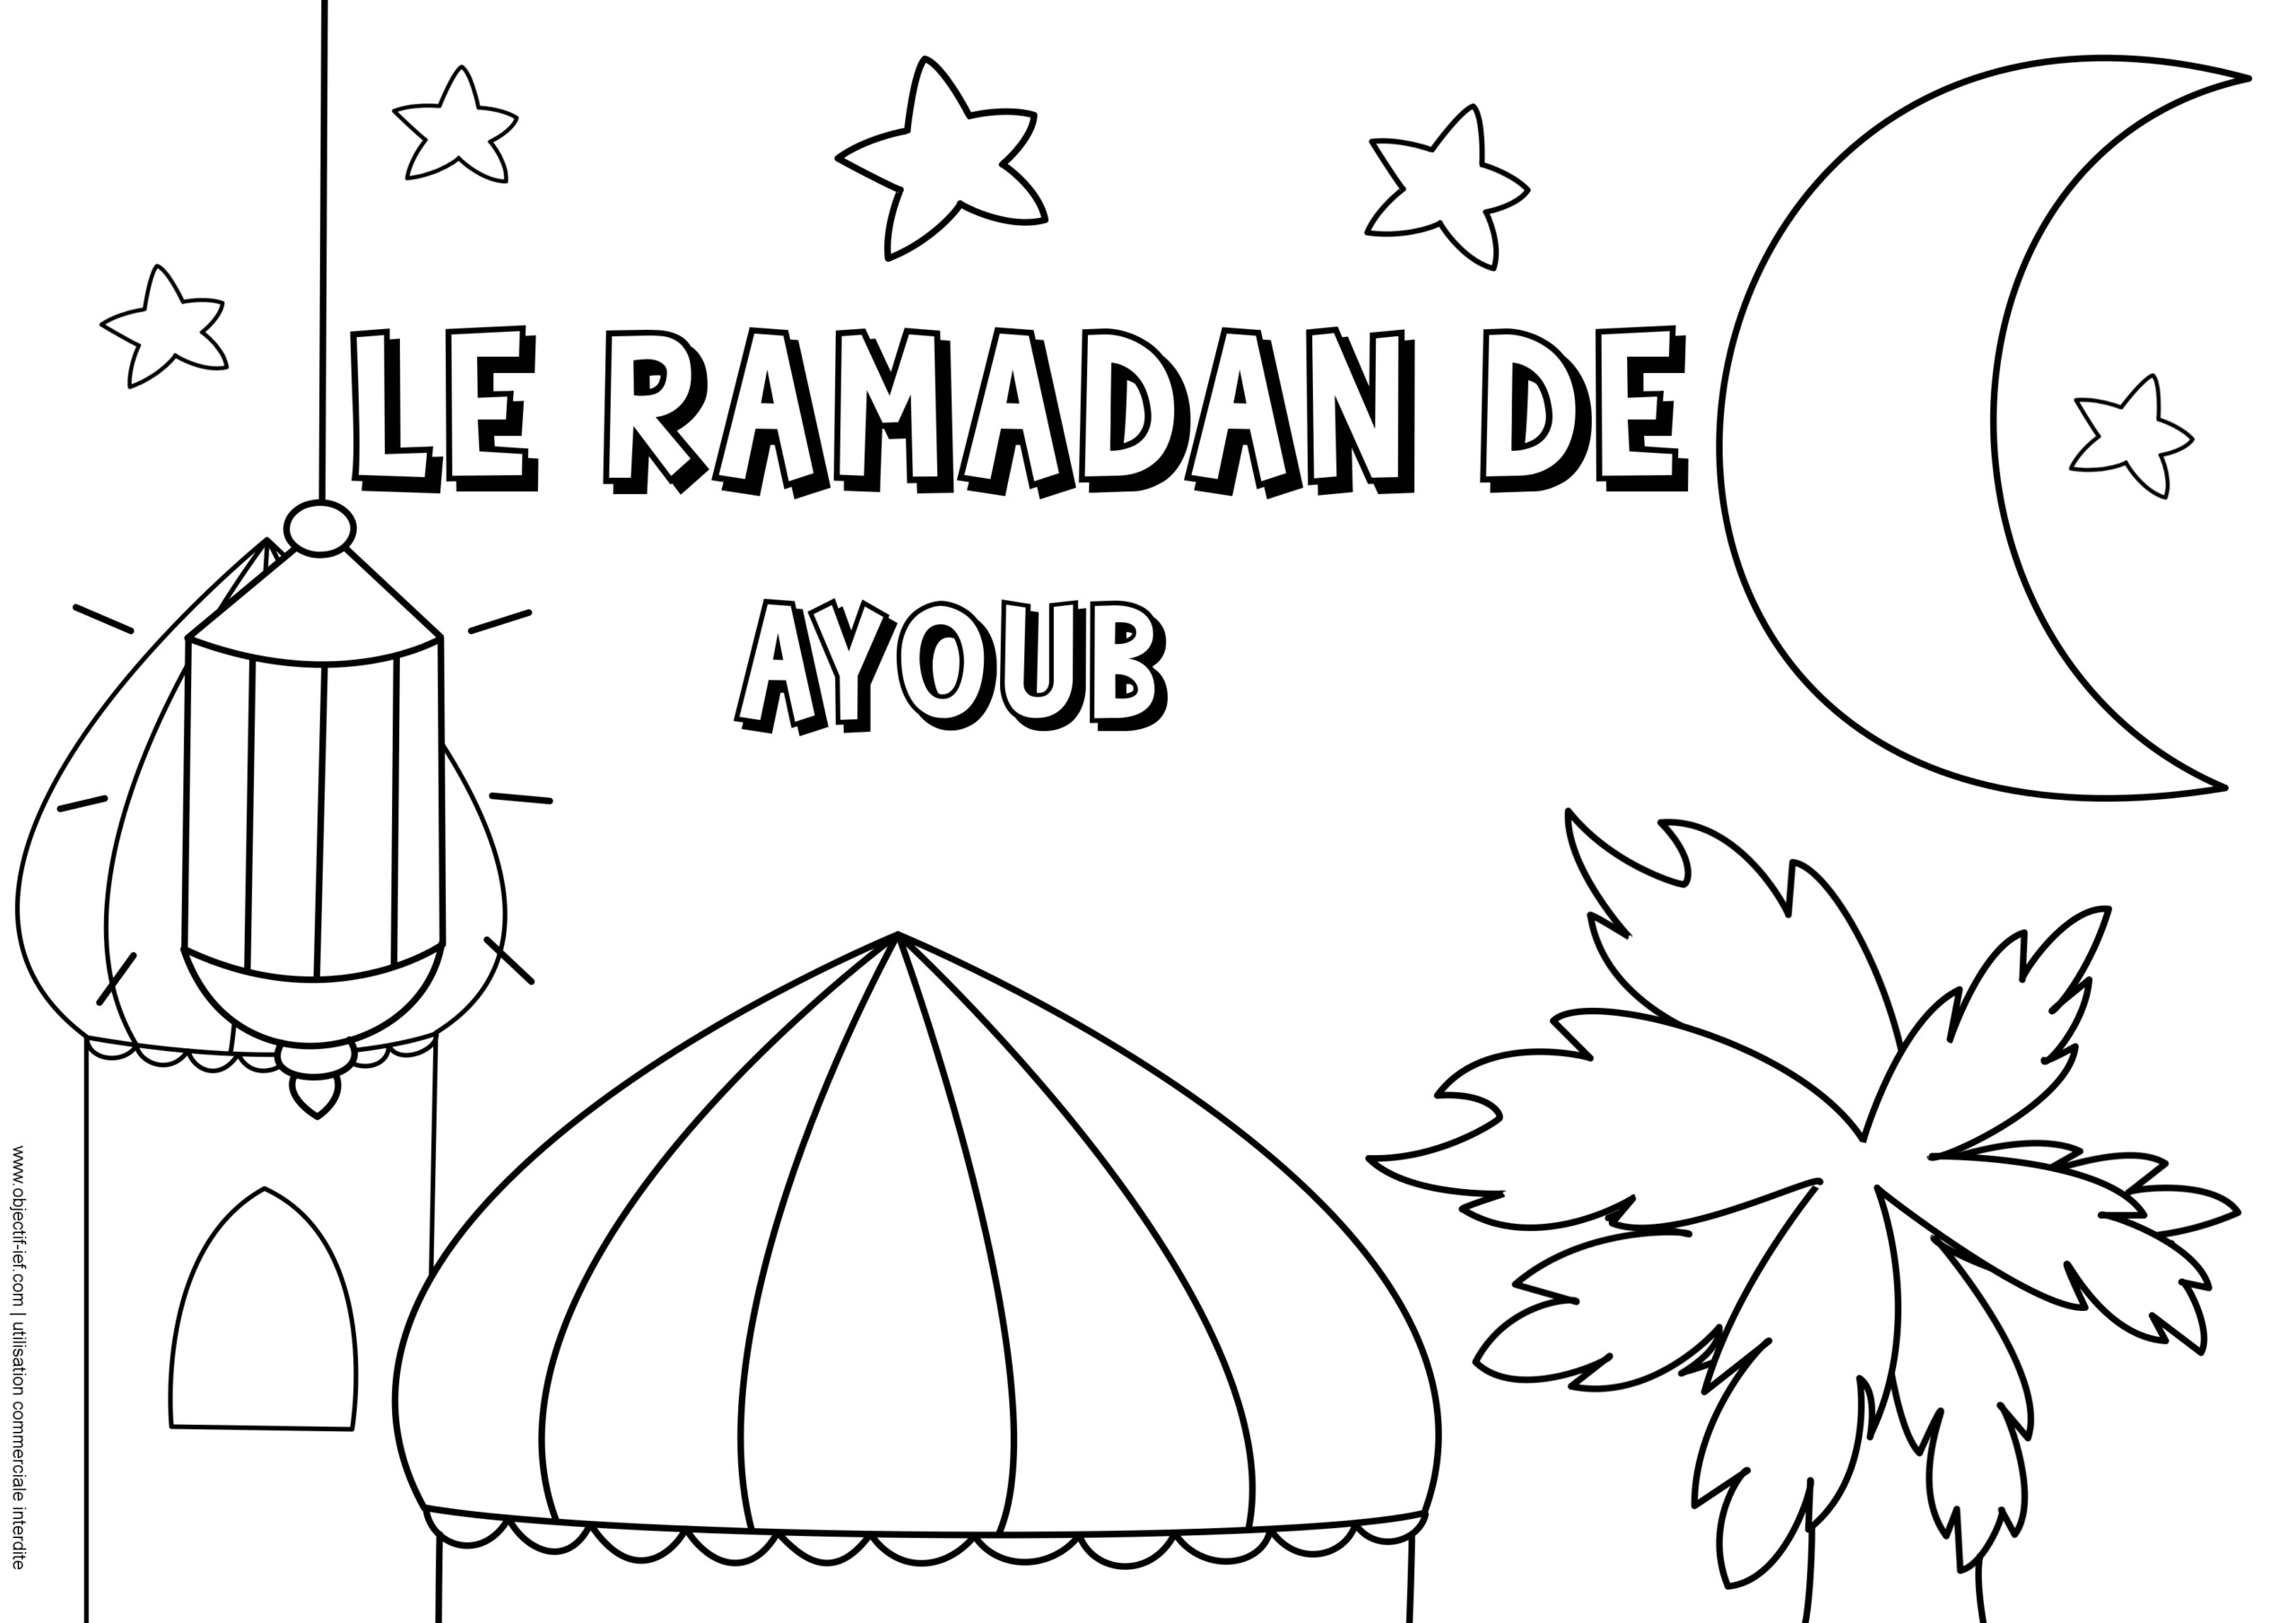 Coloriage De Ramadan Personnalisé - Objectif Ief Ramadan Mubarak, Place pour Coloriage Ramadan